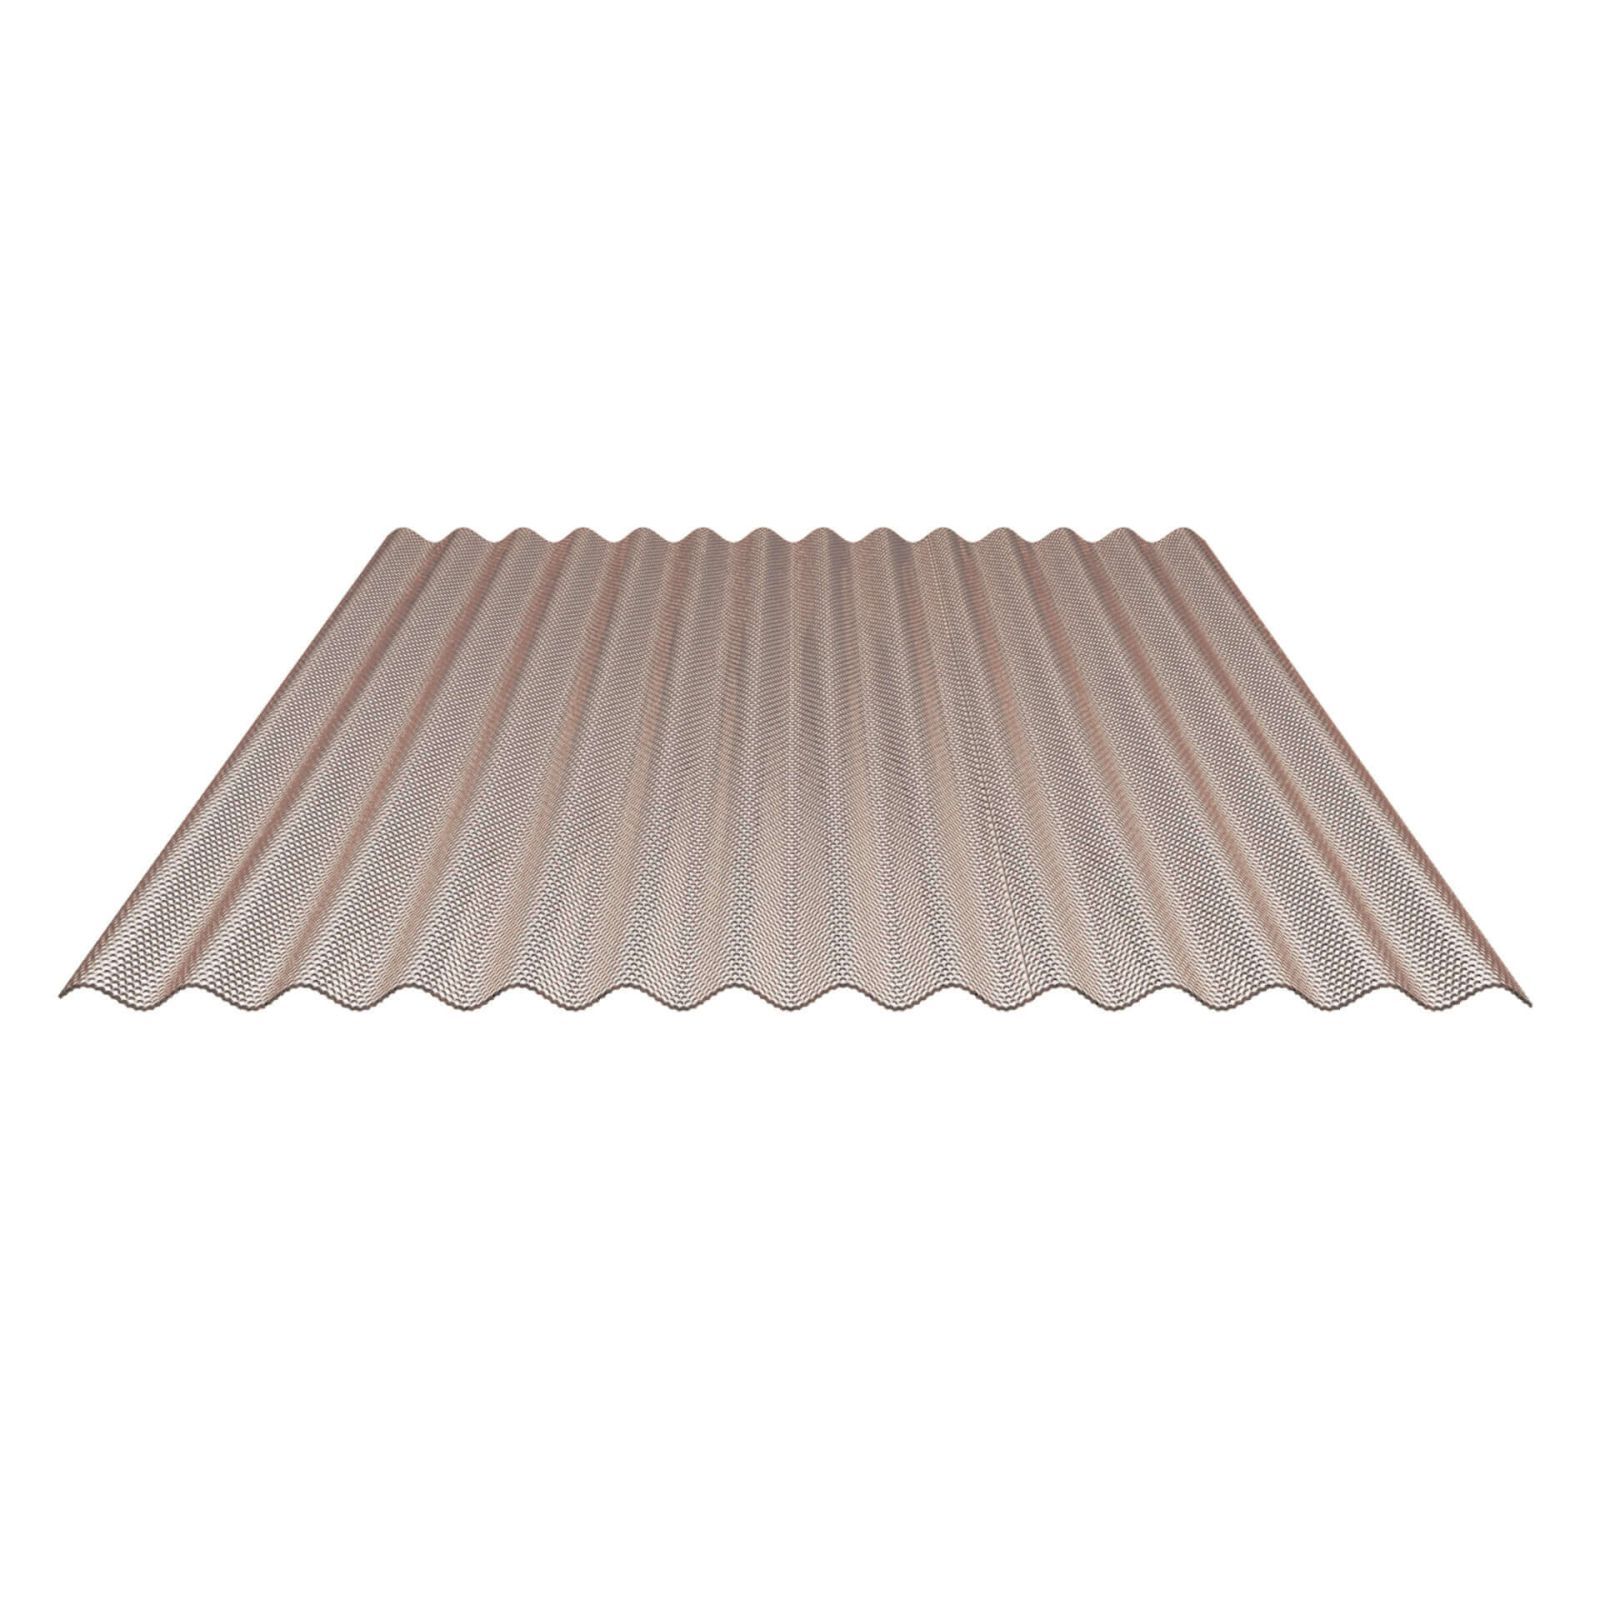 Polycarbonat Wellplatte | 76/18 | 2,80 mm | Bronze | Wabenstruktur | 500 mm